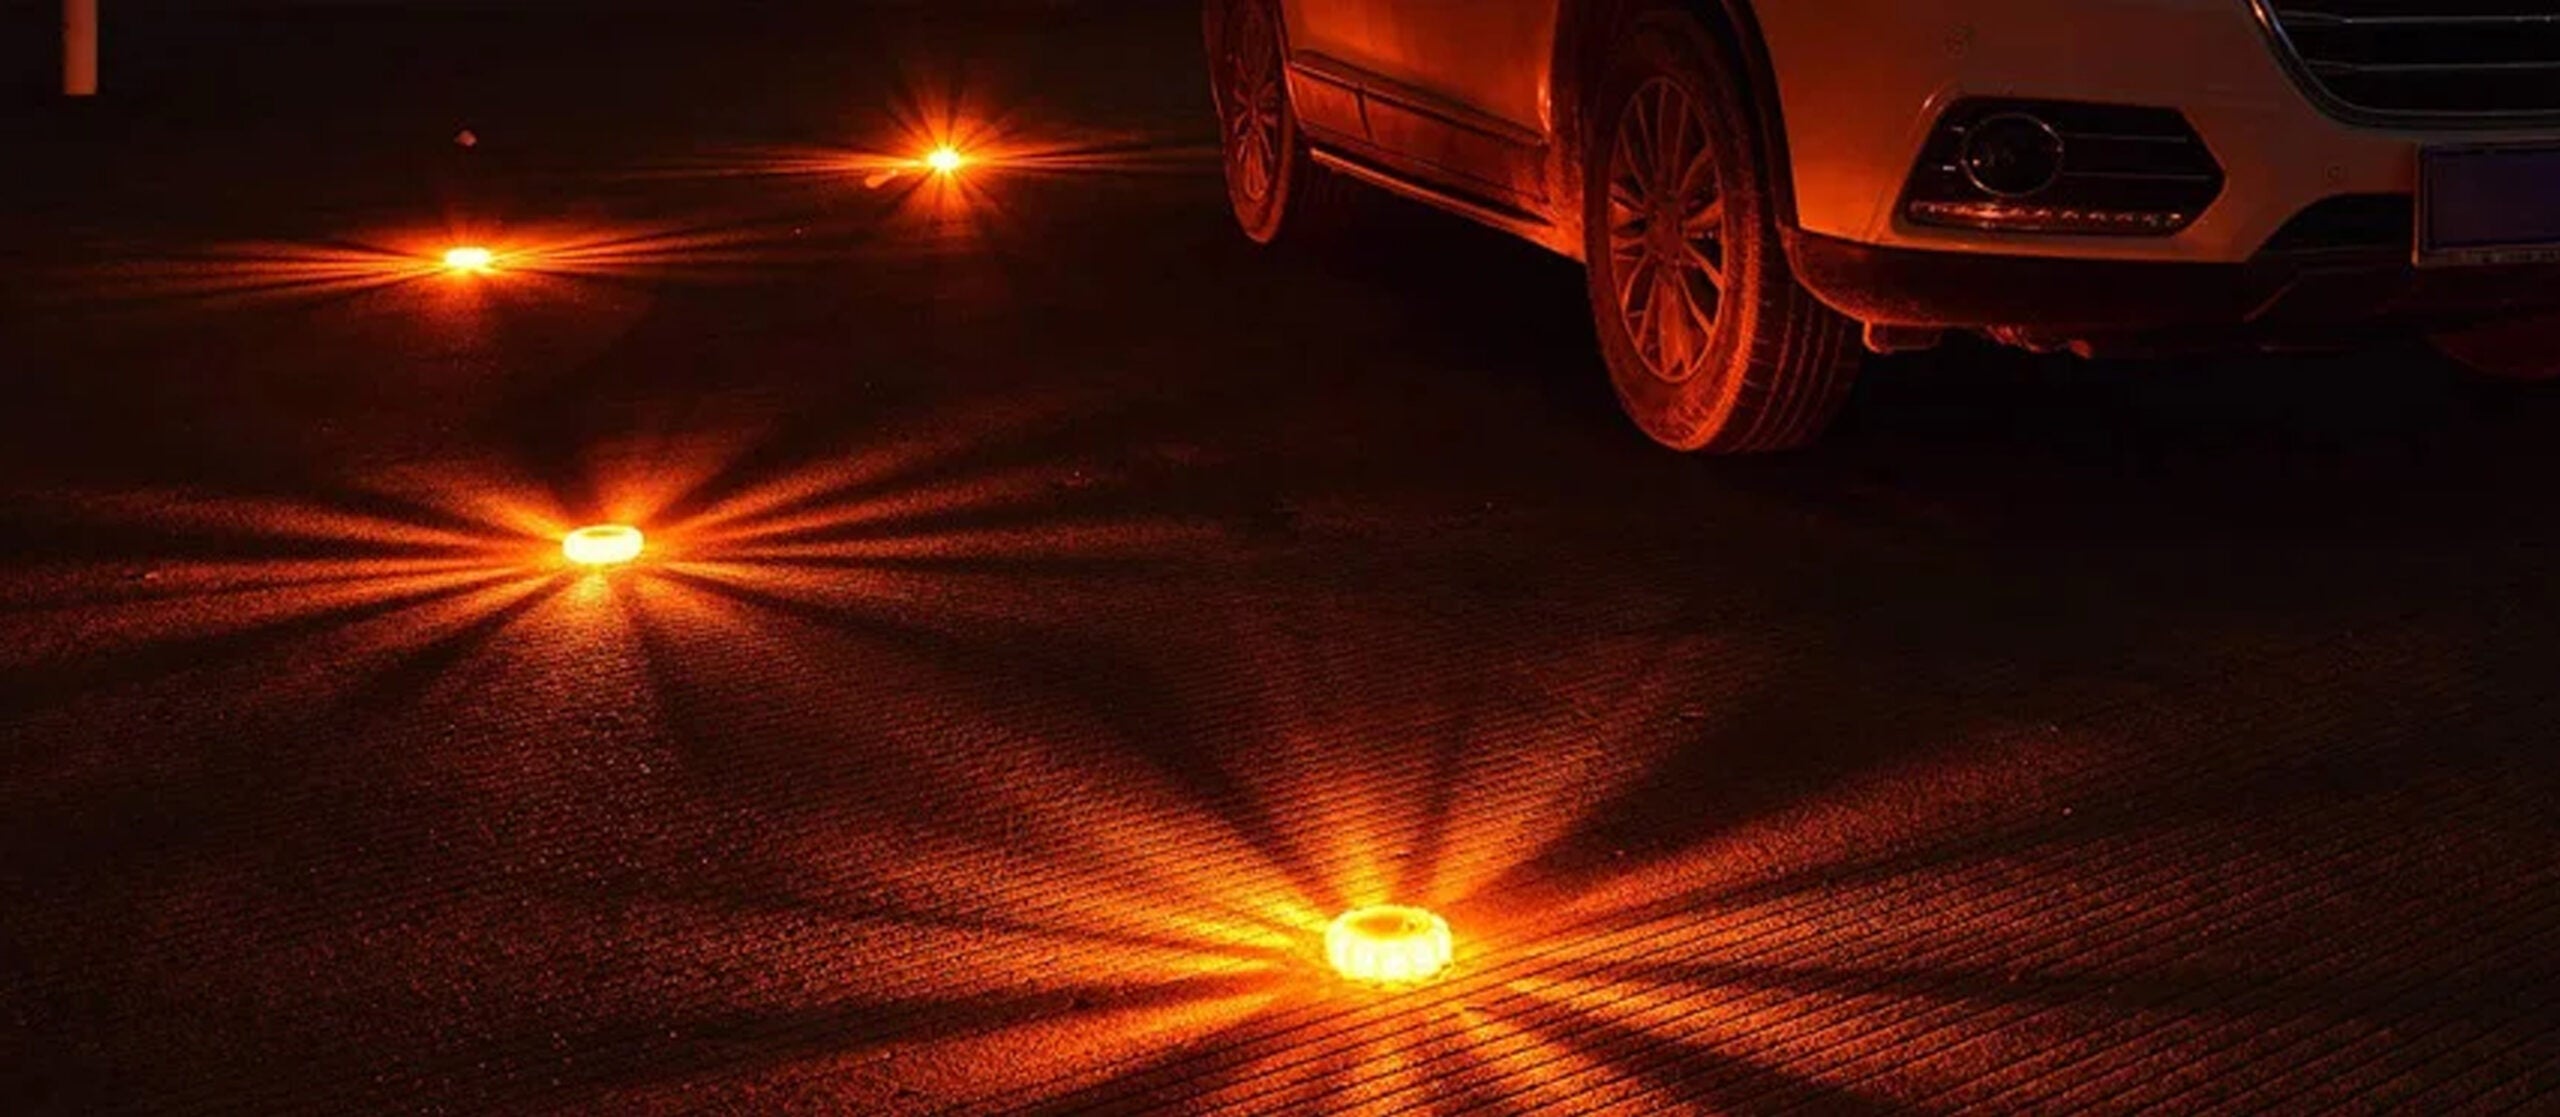 SlimK LED Car Flares Road Emergency Safety Disc Roadside Flasher Square Upgraded Version Dual Button Instant Off 3 Packs 